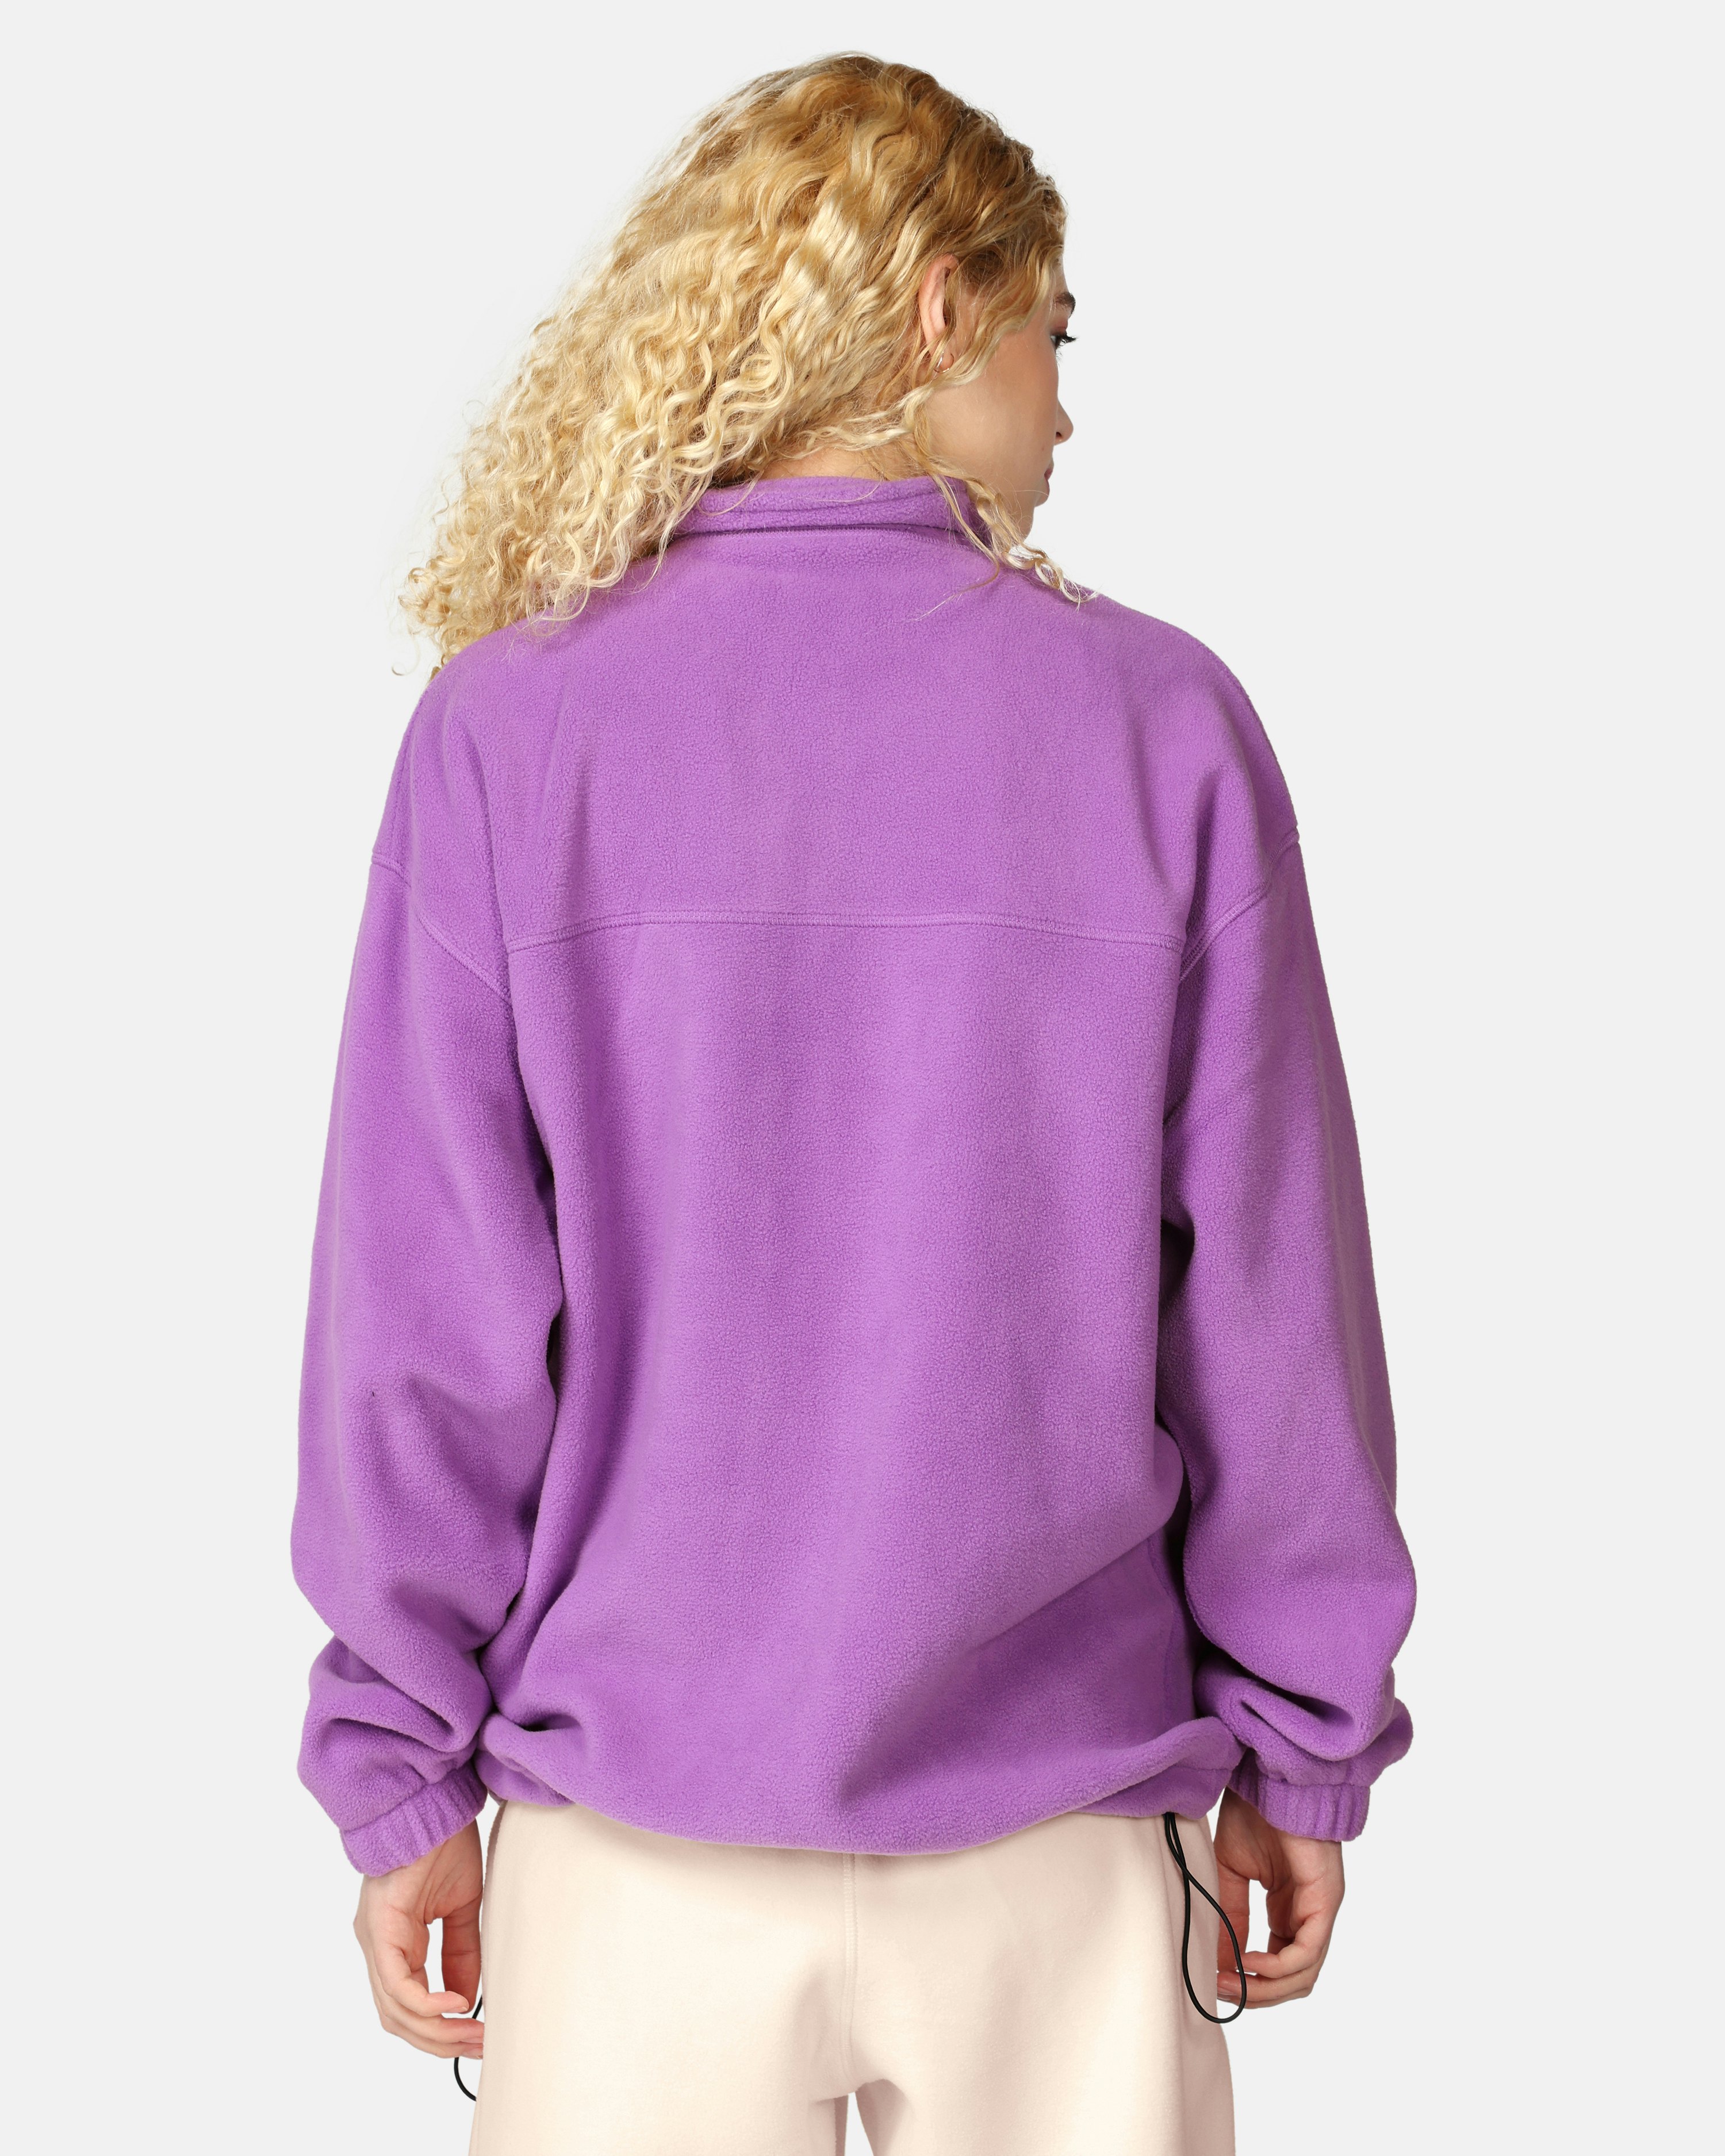 JUNKYARD Zip Fleece - Stronger Fleece Light purple, Women